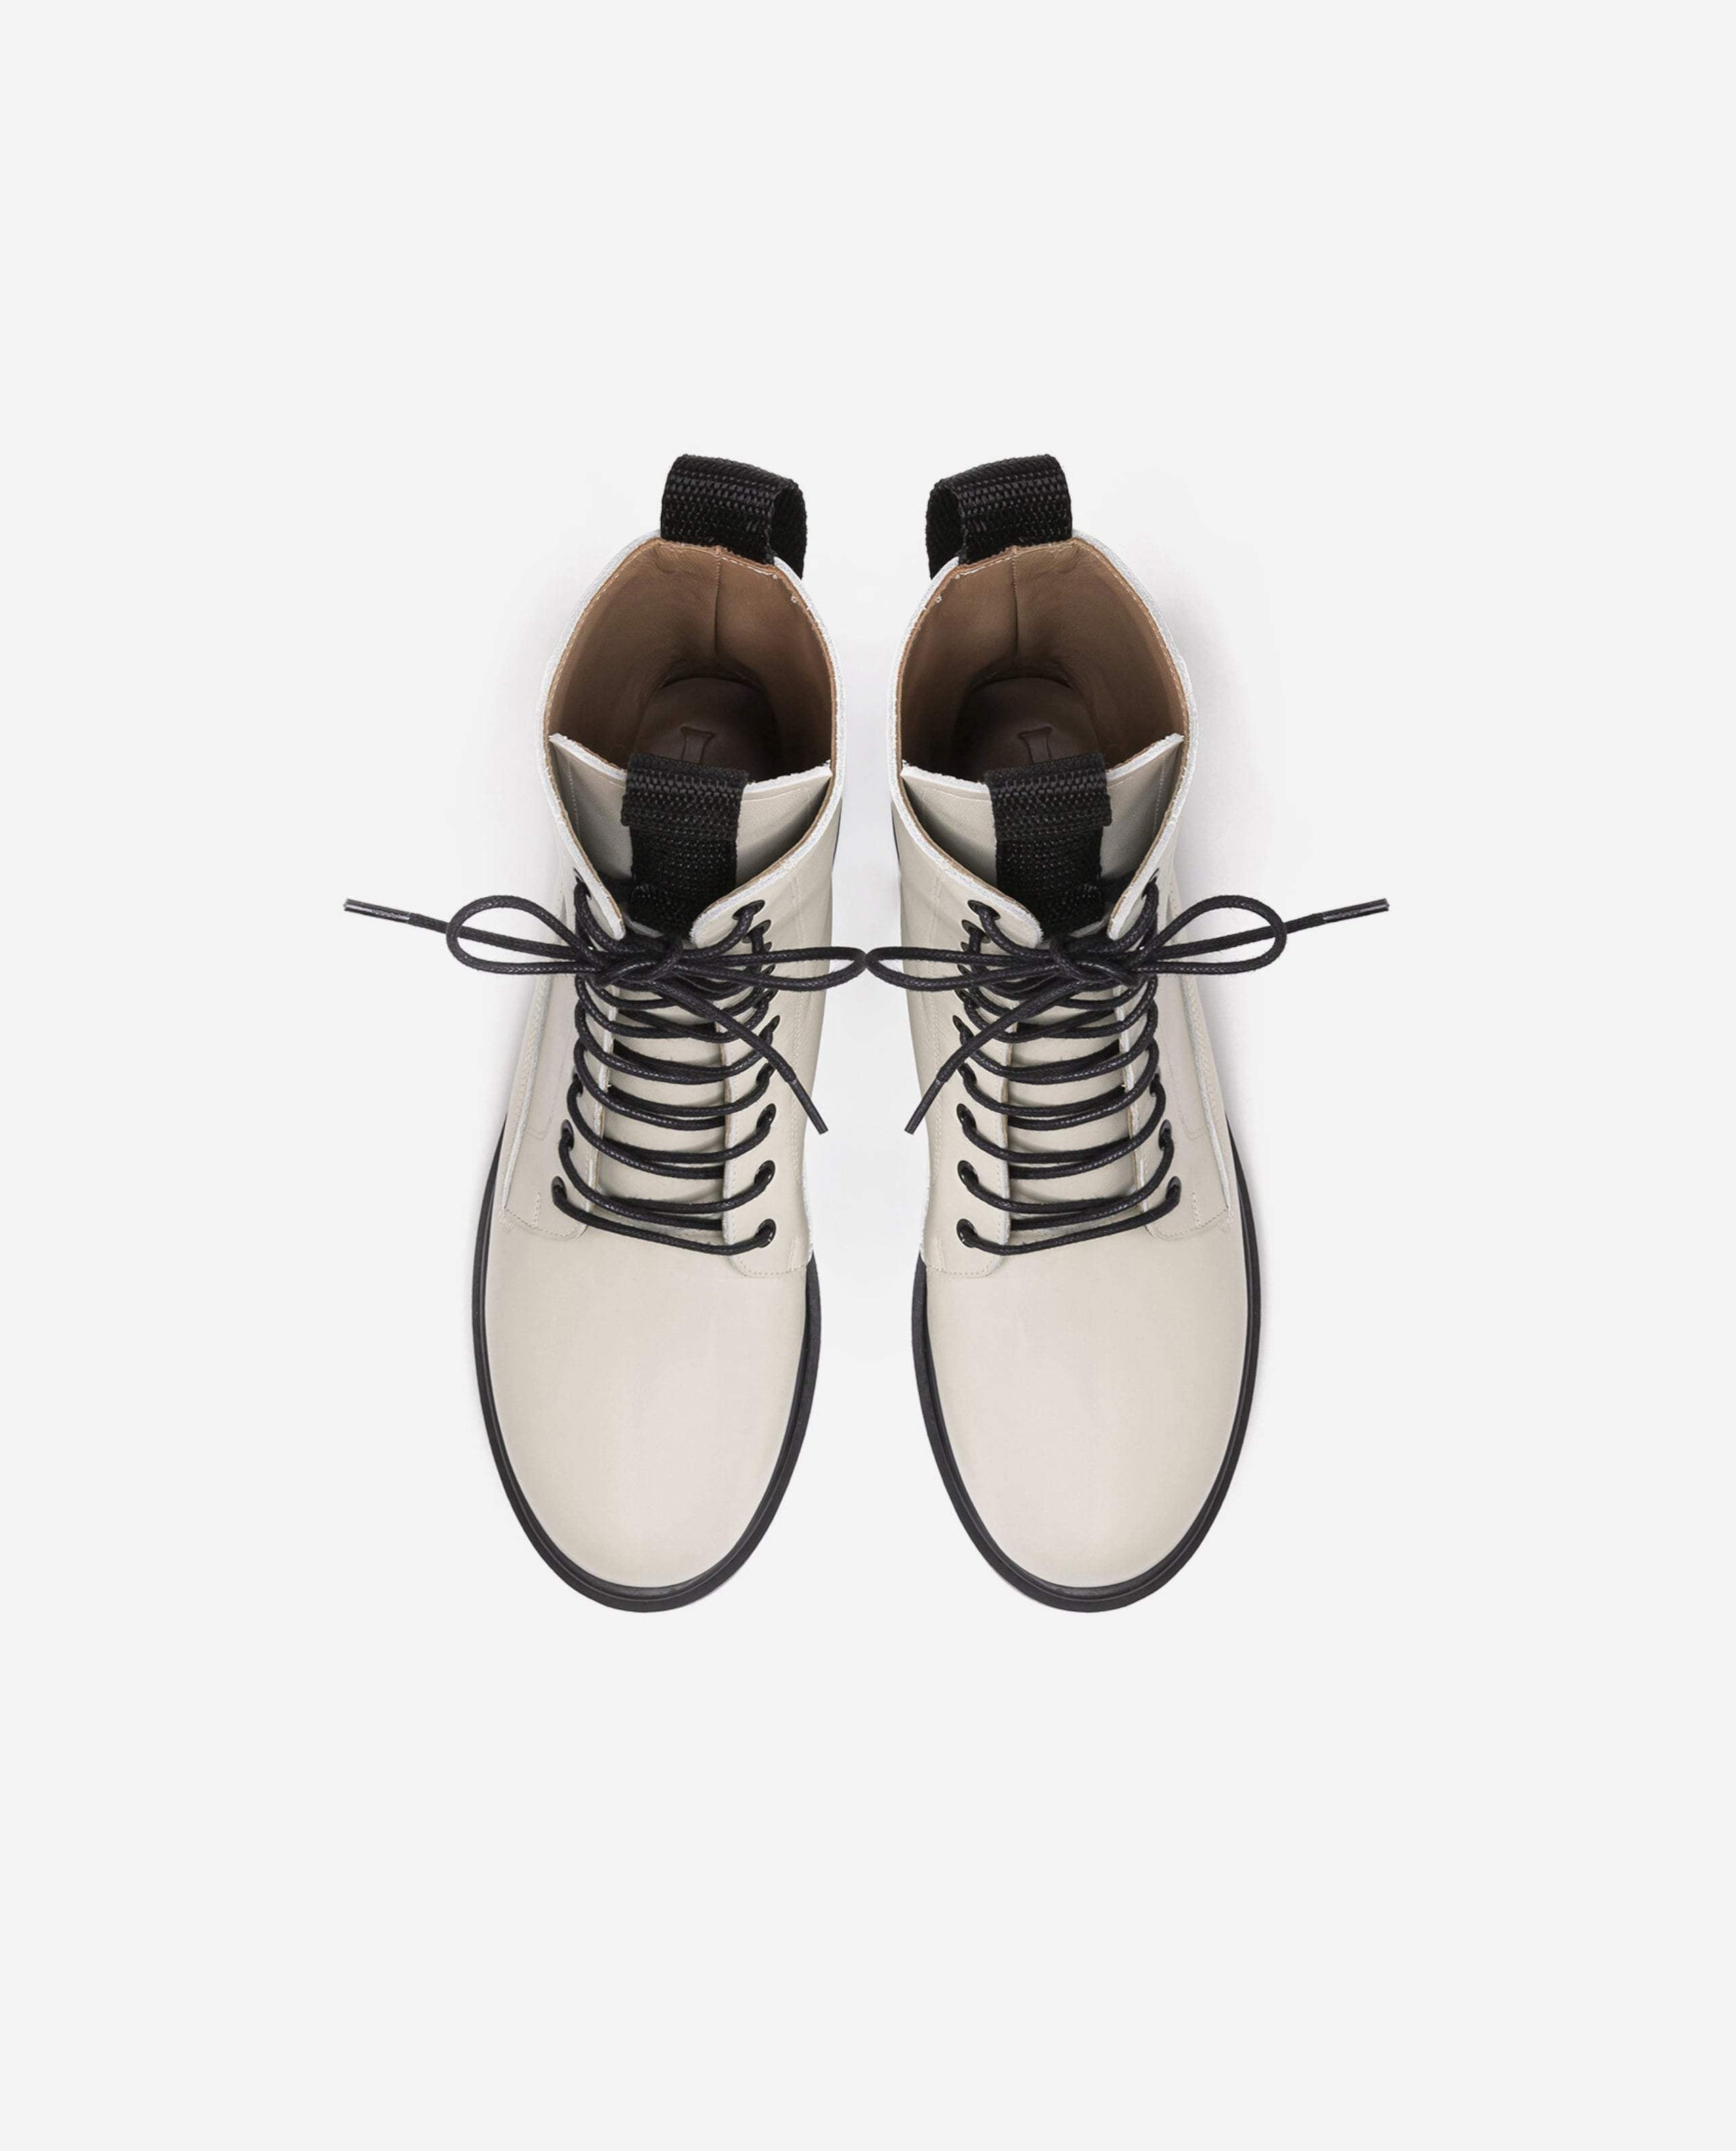 Lovi Creme Leather Boots 21020815101-015 - 03